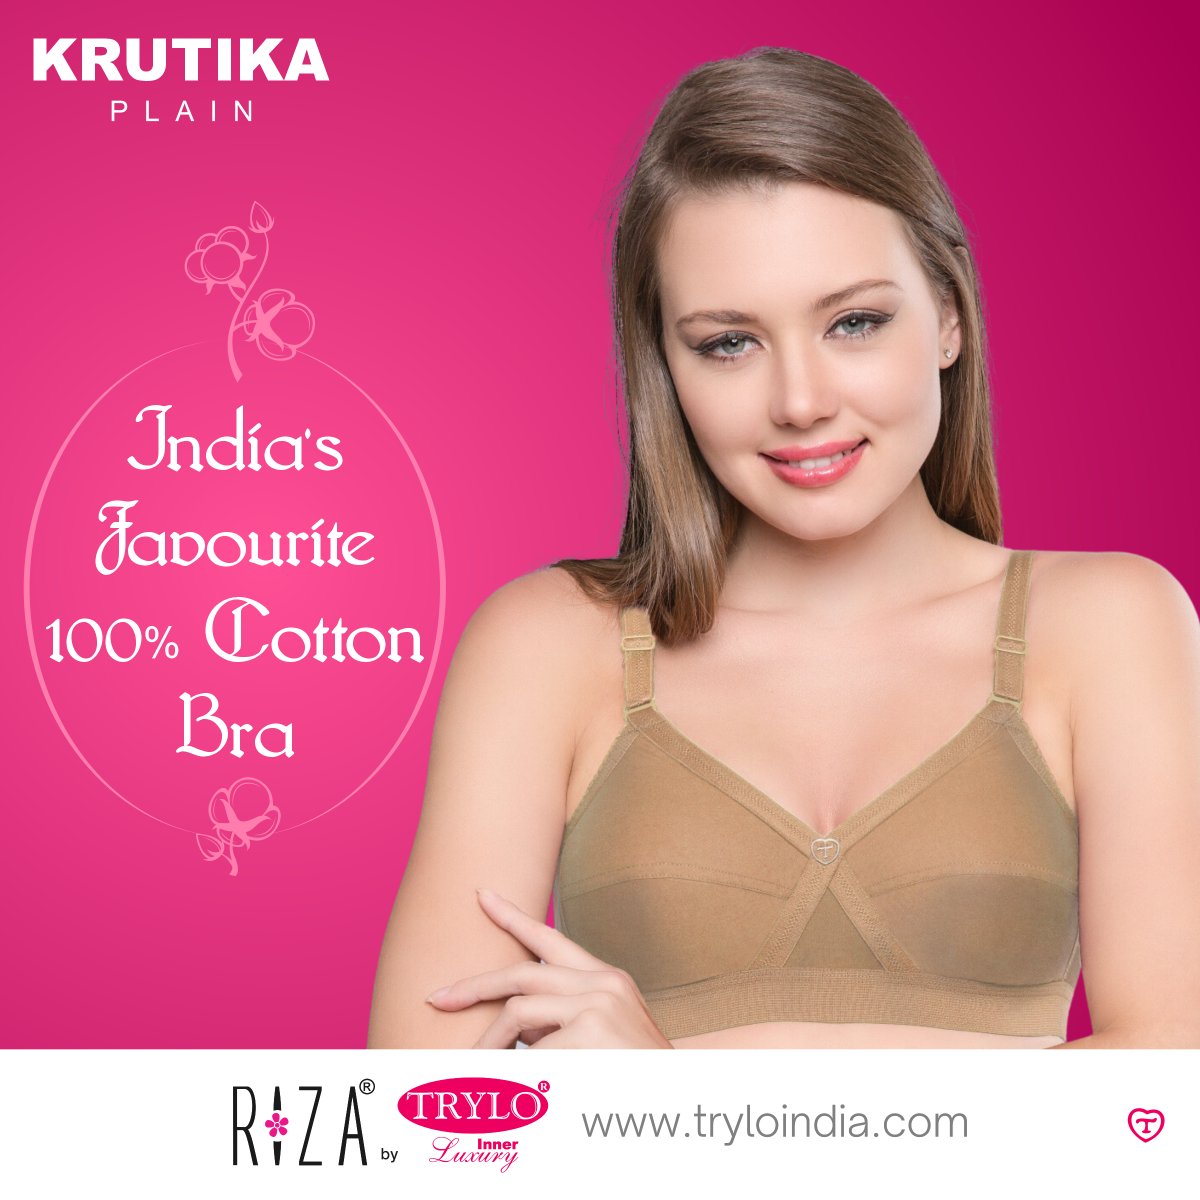 Trylo Intimates on X: Krutika Plain is India's most popular bra